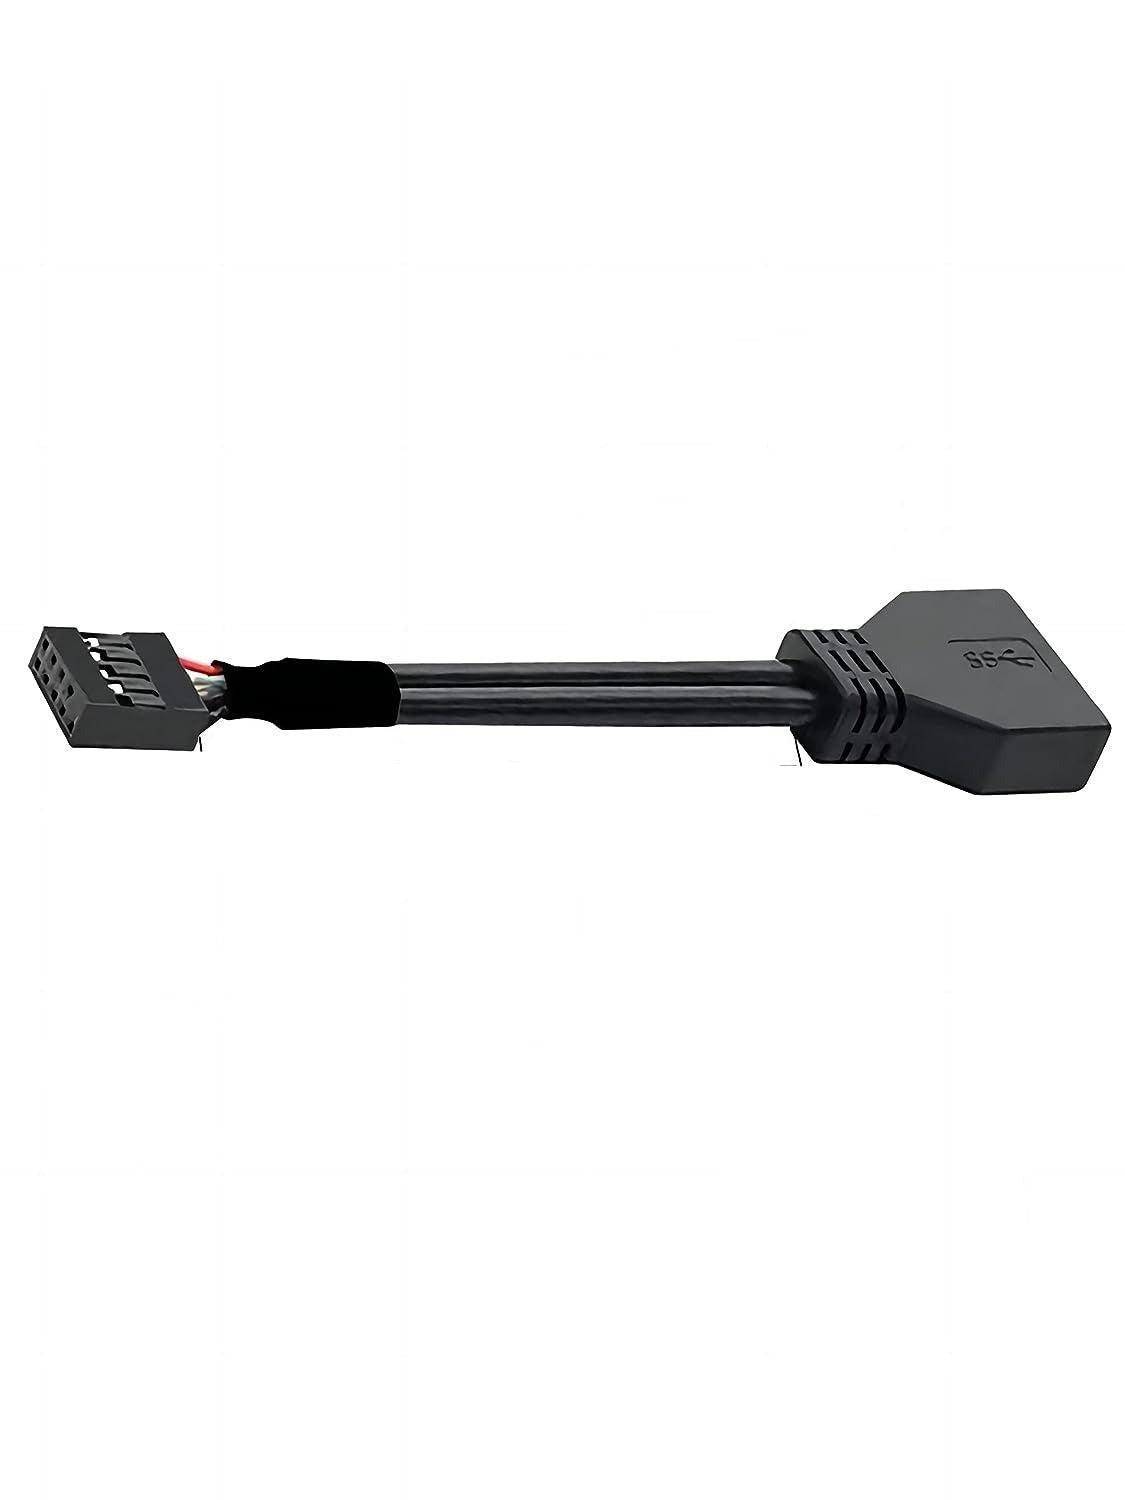 NÖRDIC 9 PIN USB2.0 til 20/19pin USB 3.0 adapter 12cm